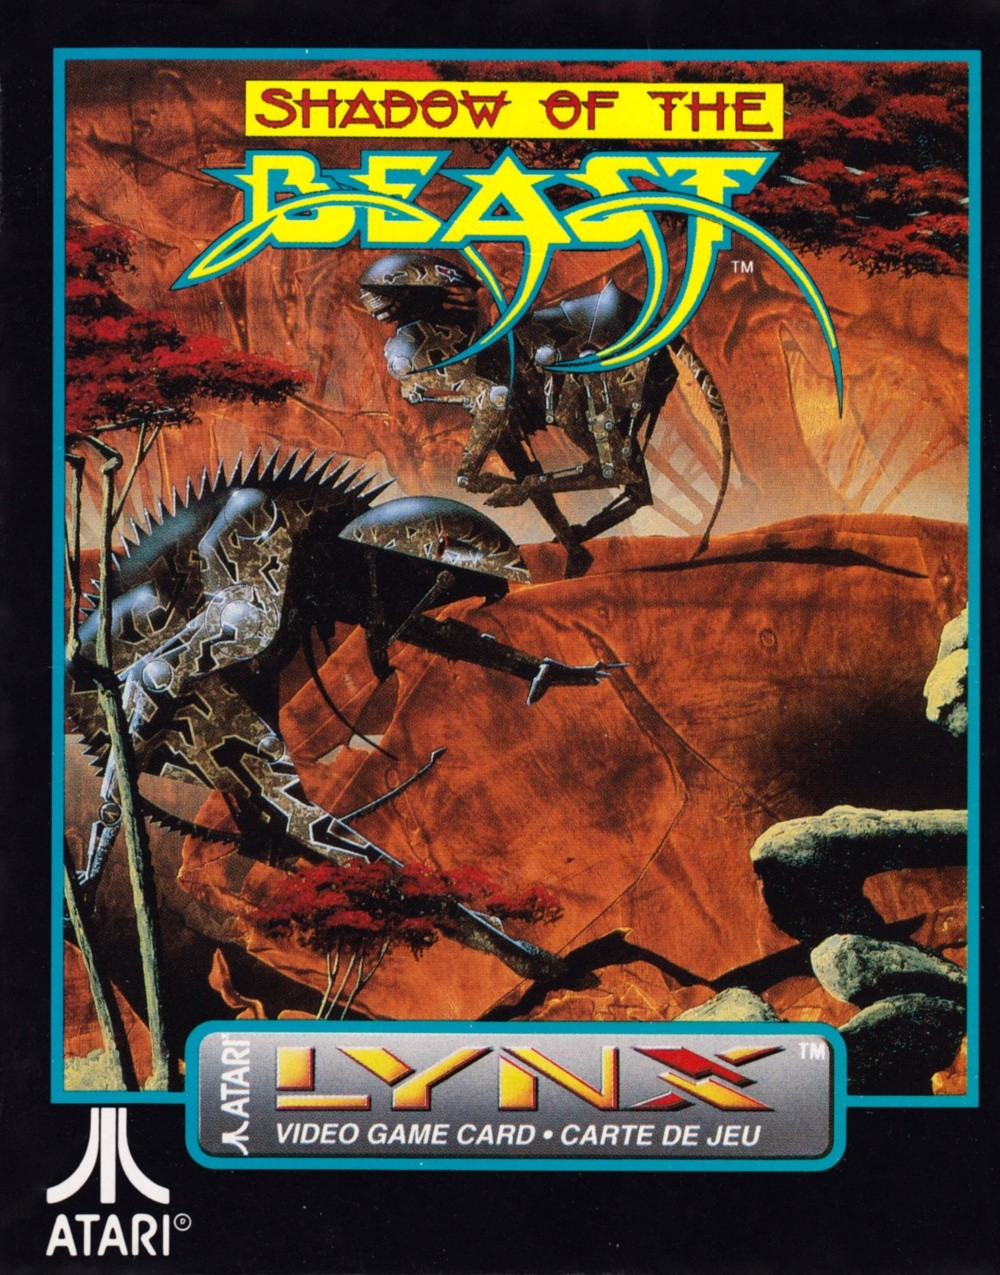 Capa do jogo Shadow of the Beast